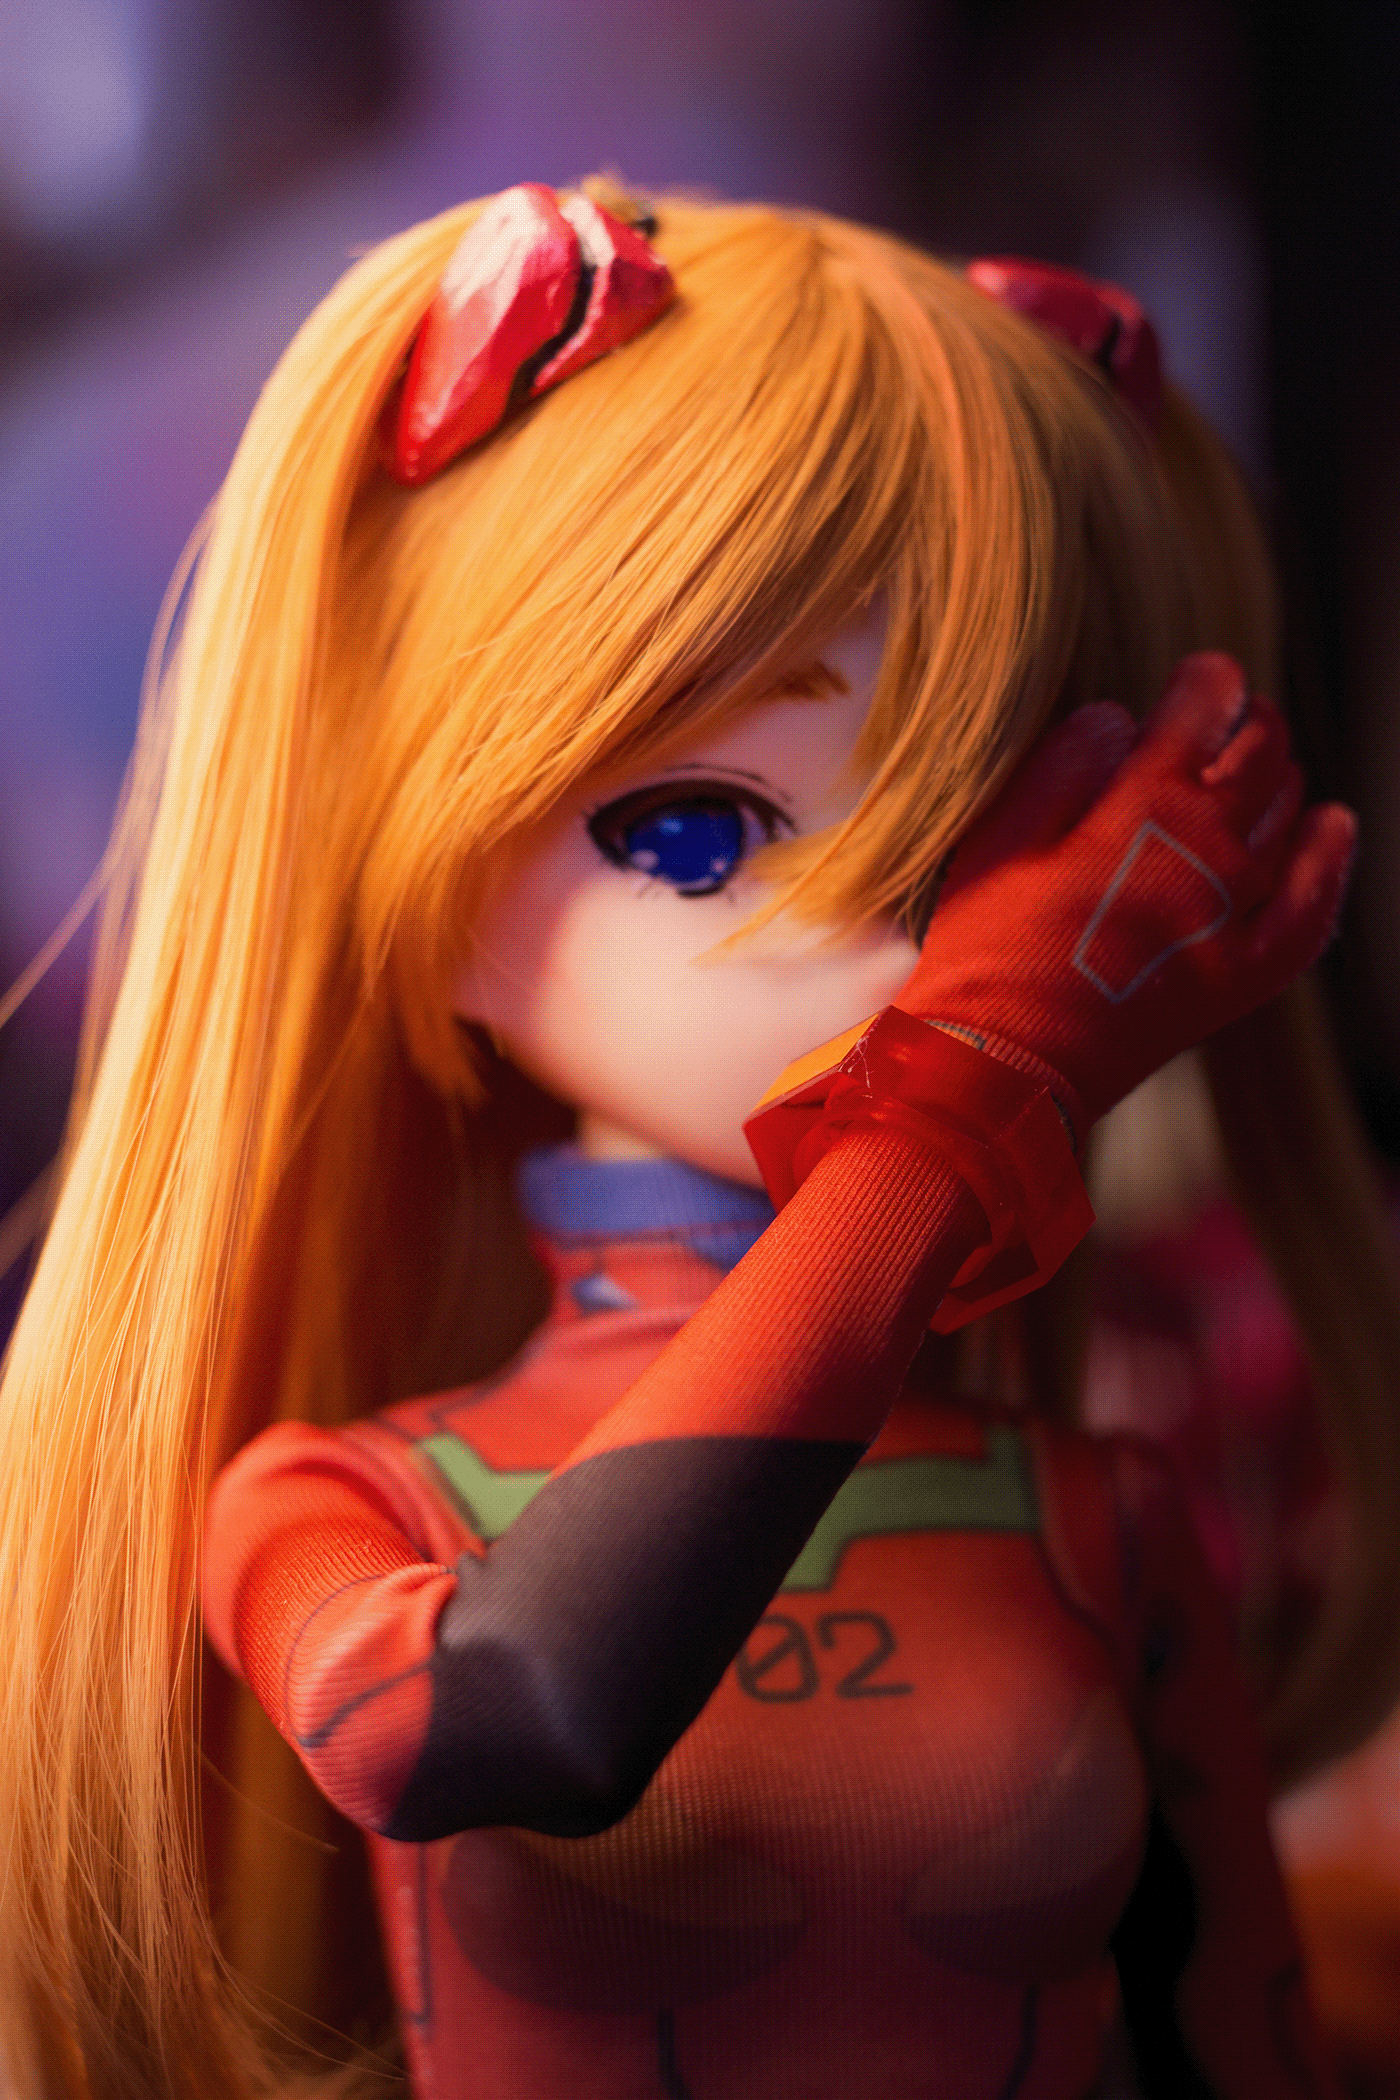 anime Artdoll ball jointed doll bjd doll Doll Photography Photography  toy toy photography vinyl doll